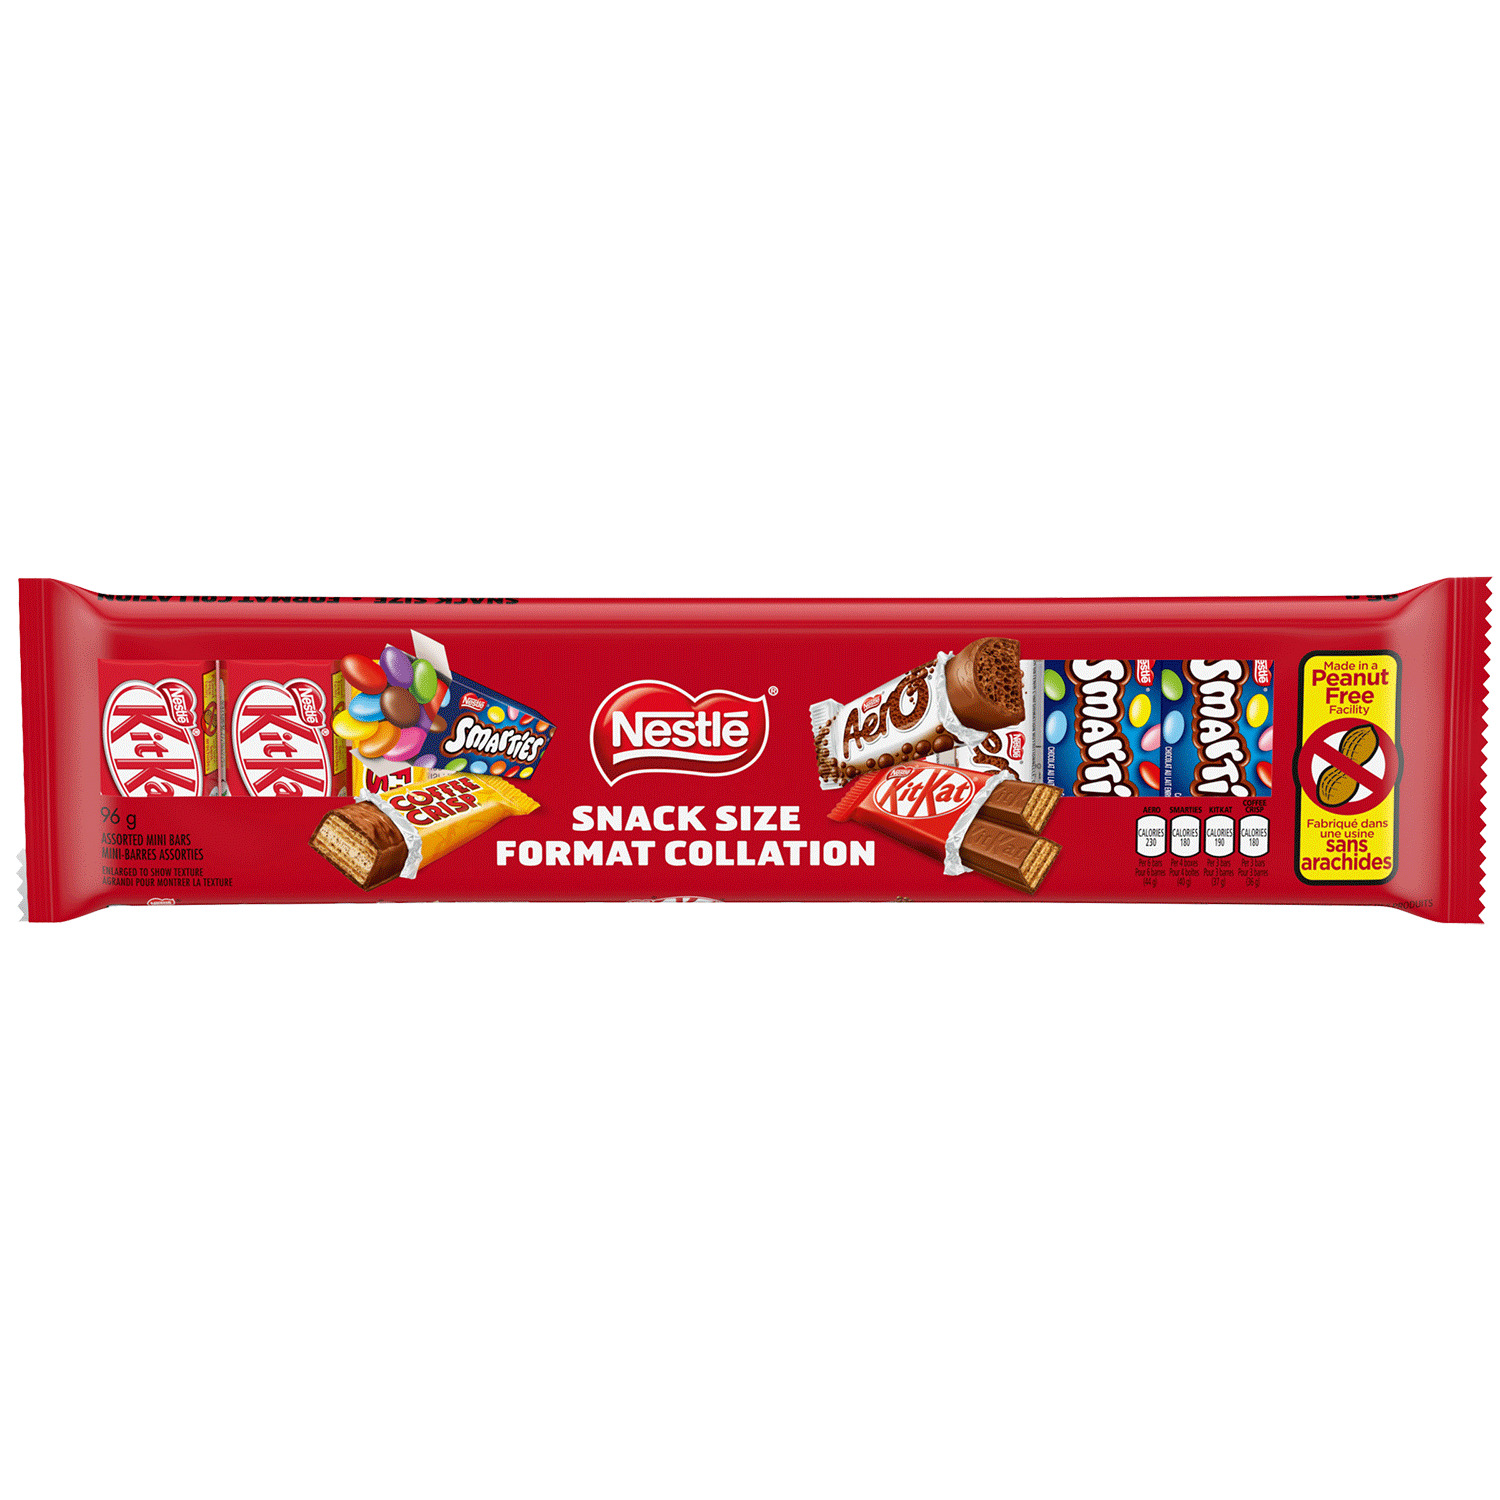 Nestlé - Assorted mini bars - Snack size, pk. of 9